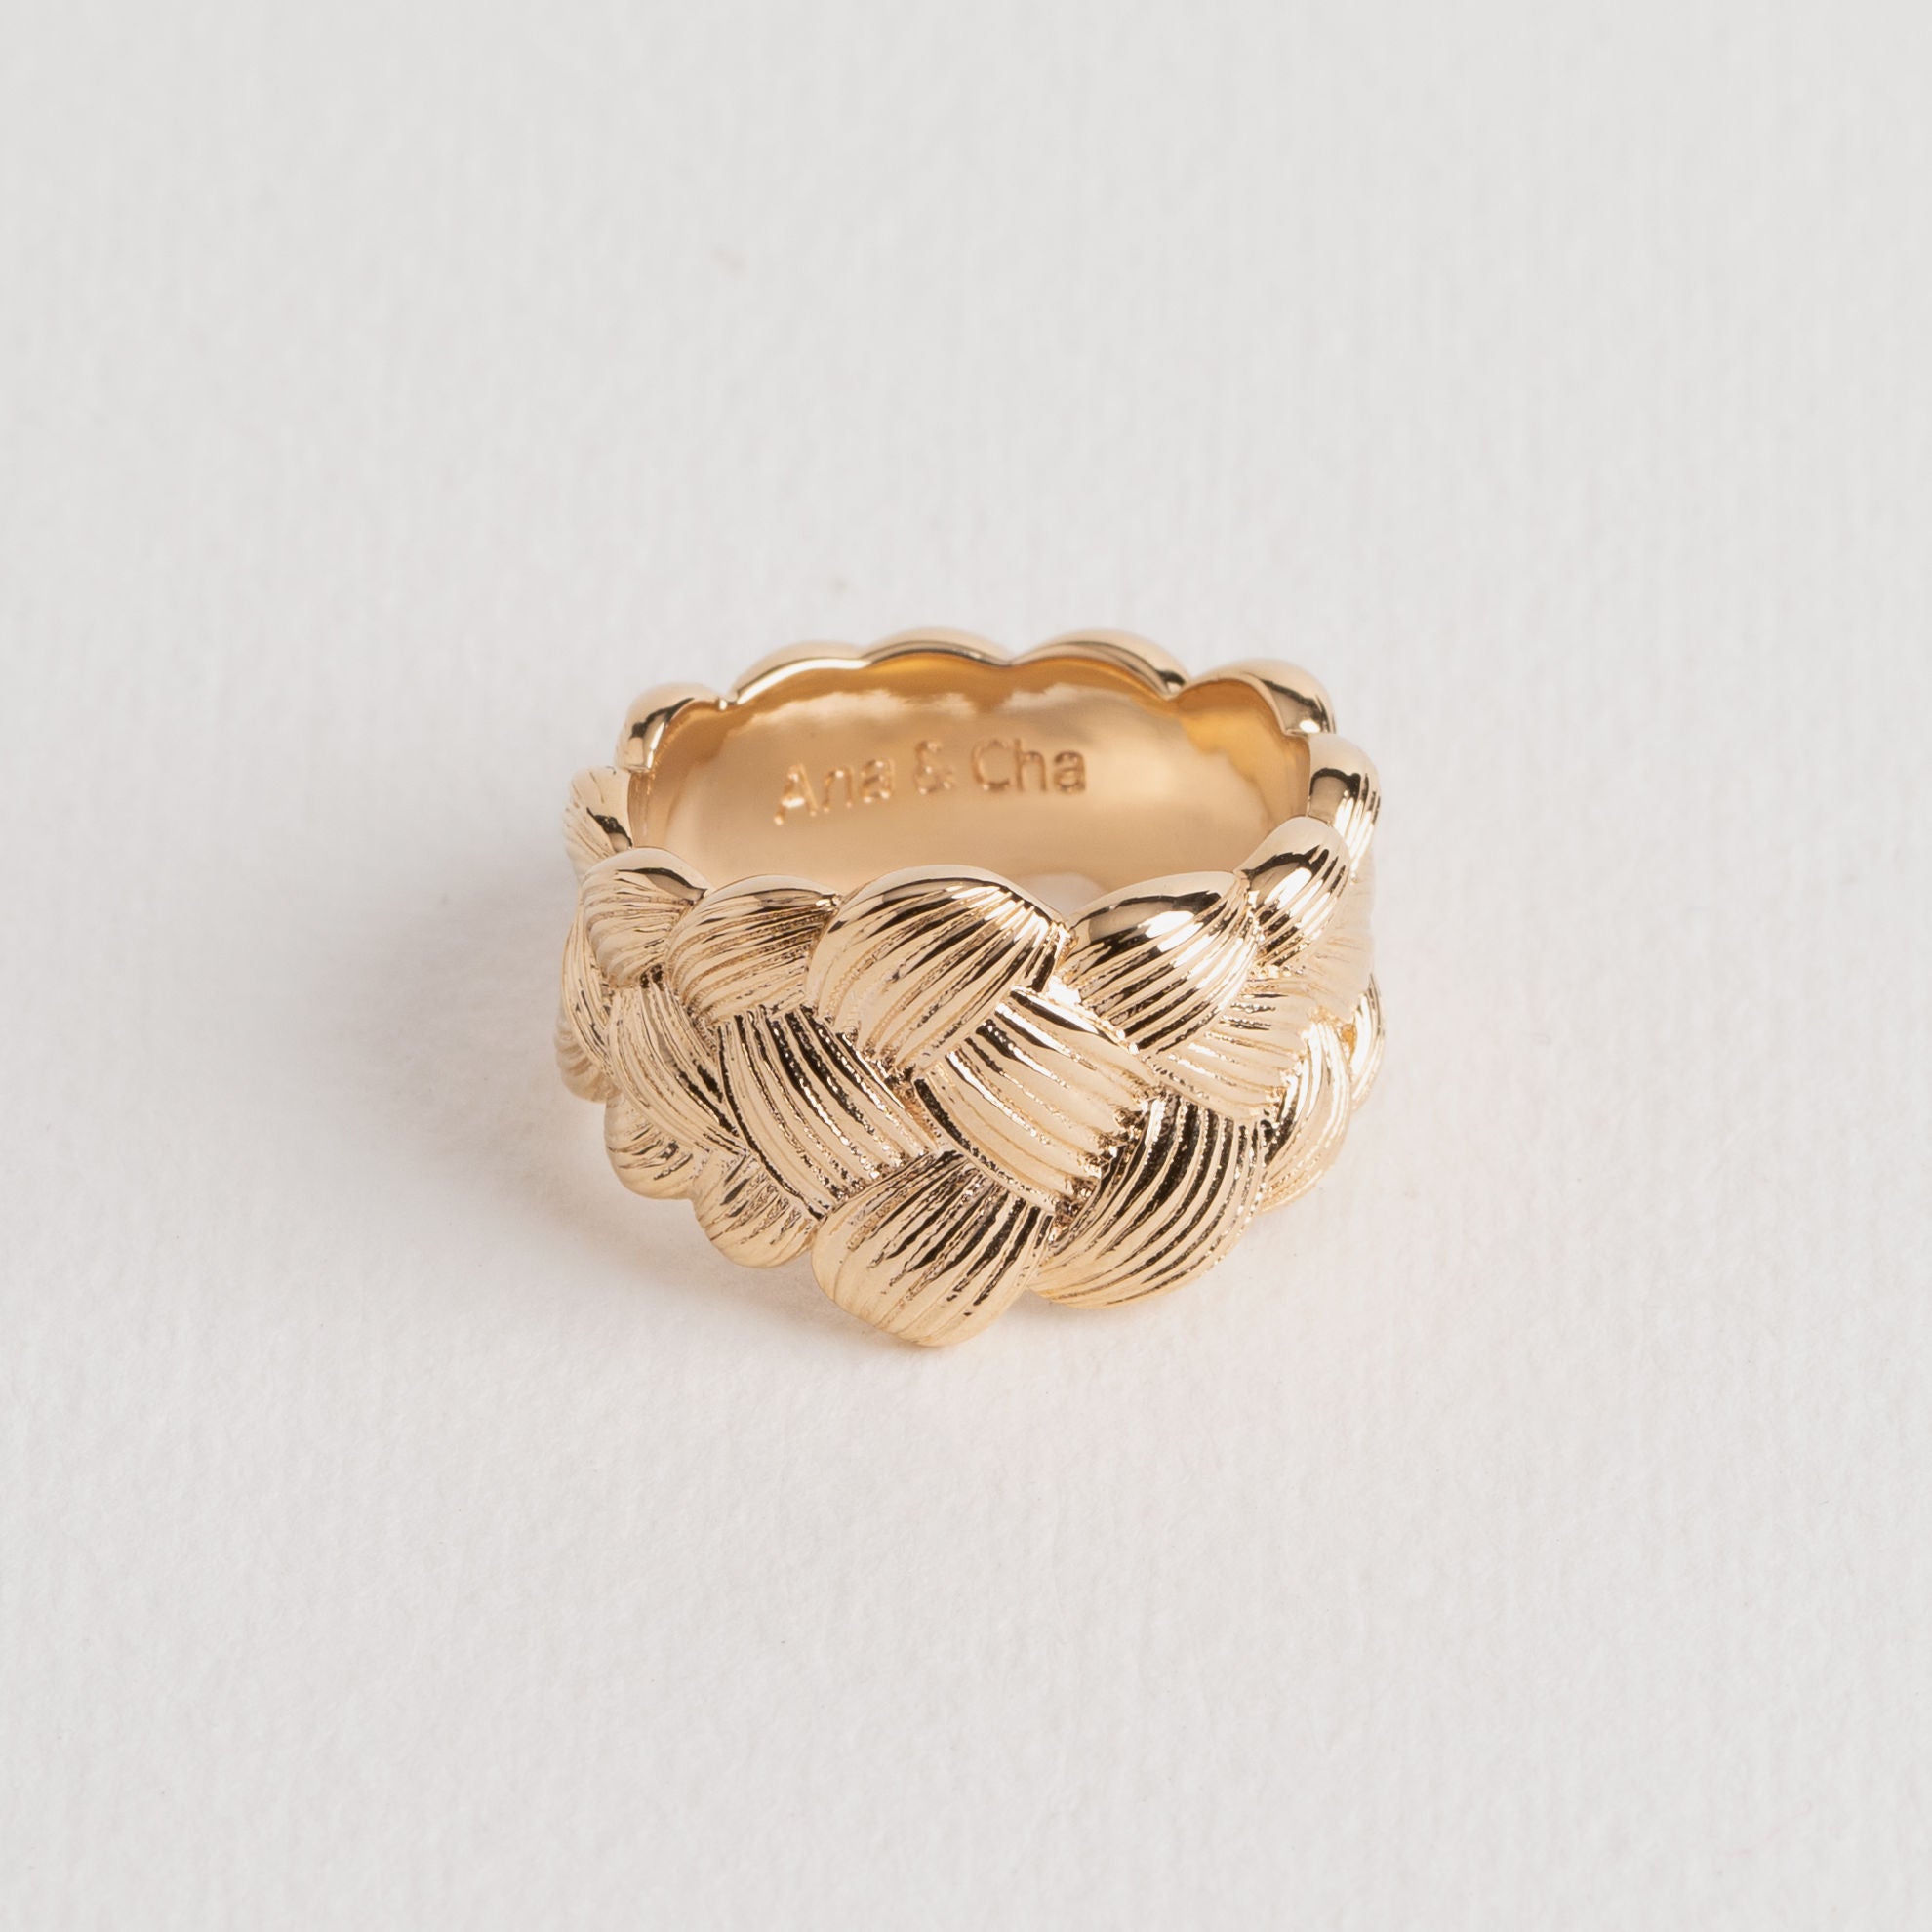 Maeva - Gold Plated Ring - Ana et Cha